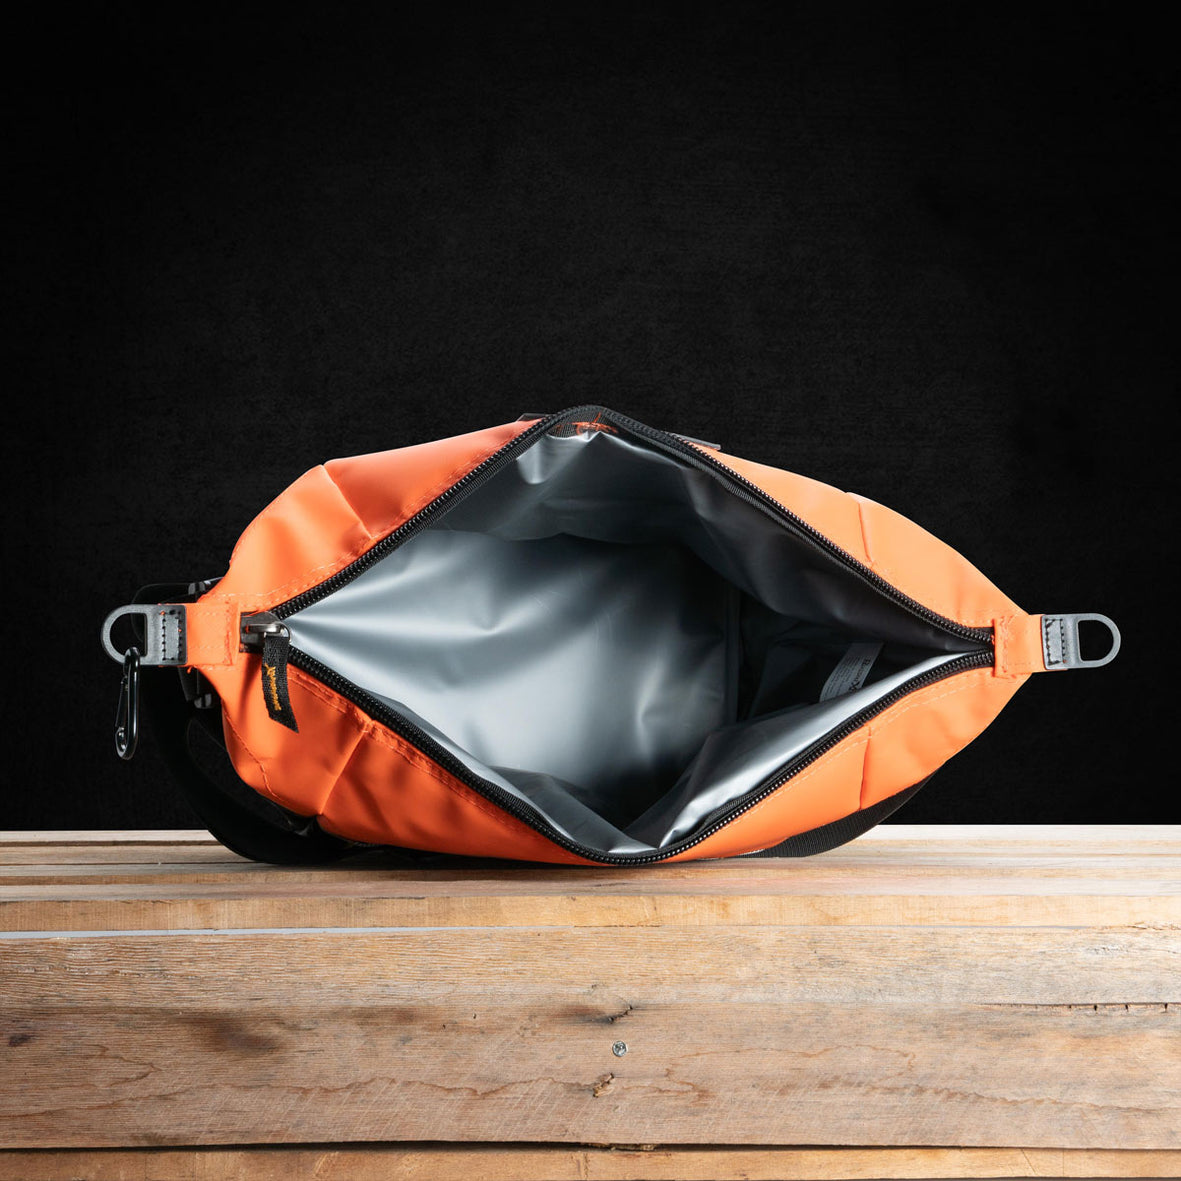 Insulated Orange PVC Crib Bag RX05L106PVCOR by Rugged Xtremes